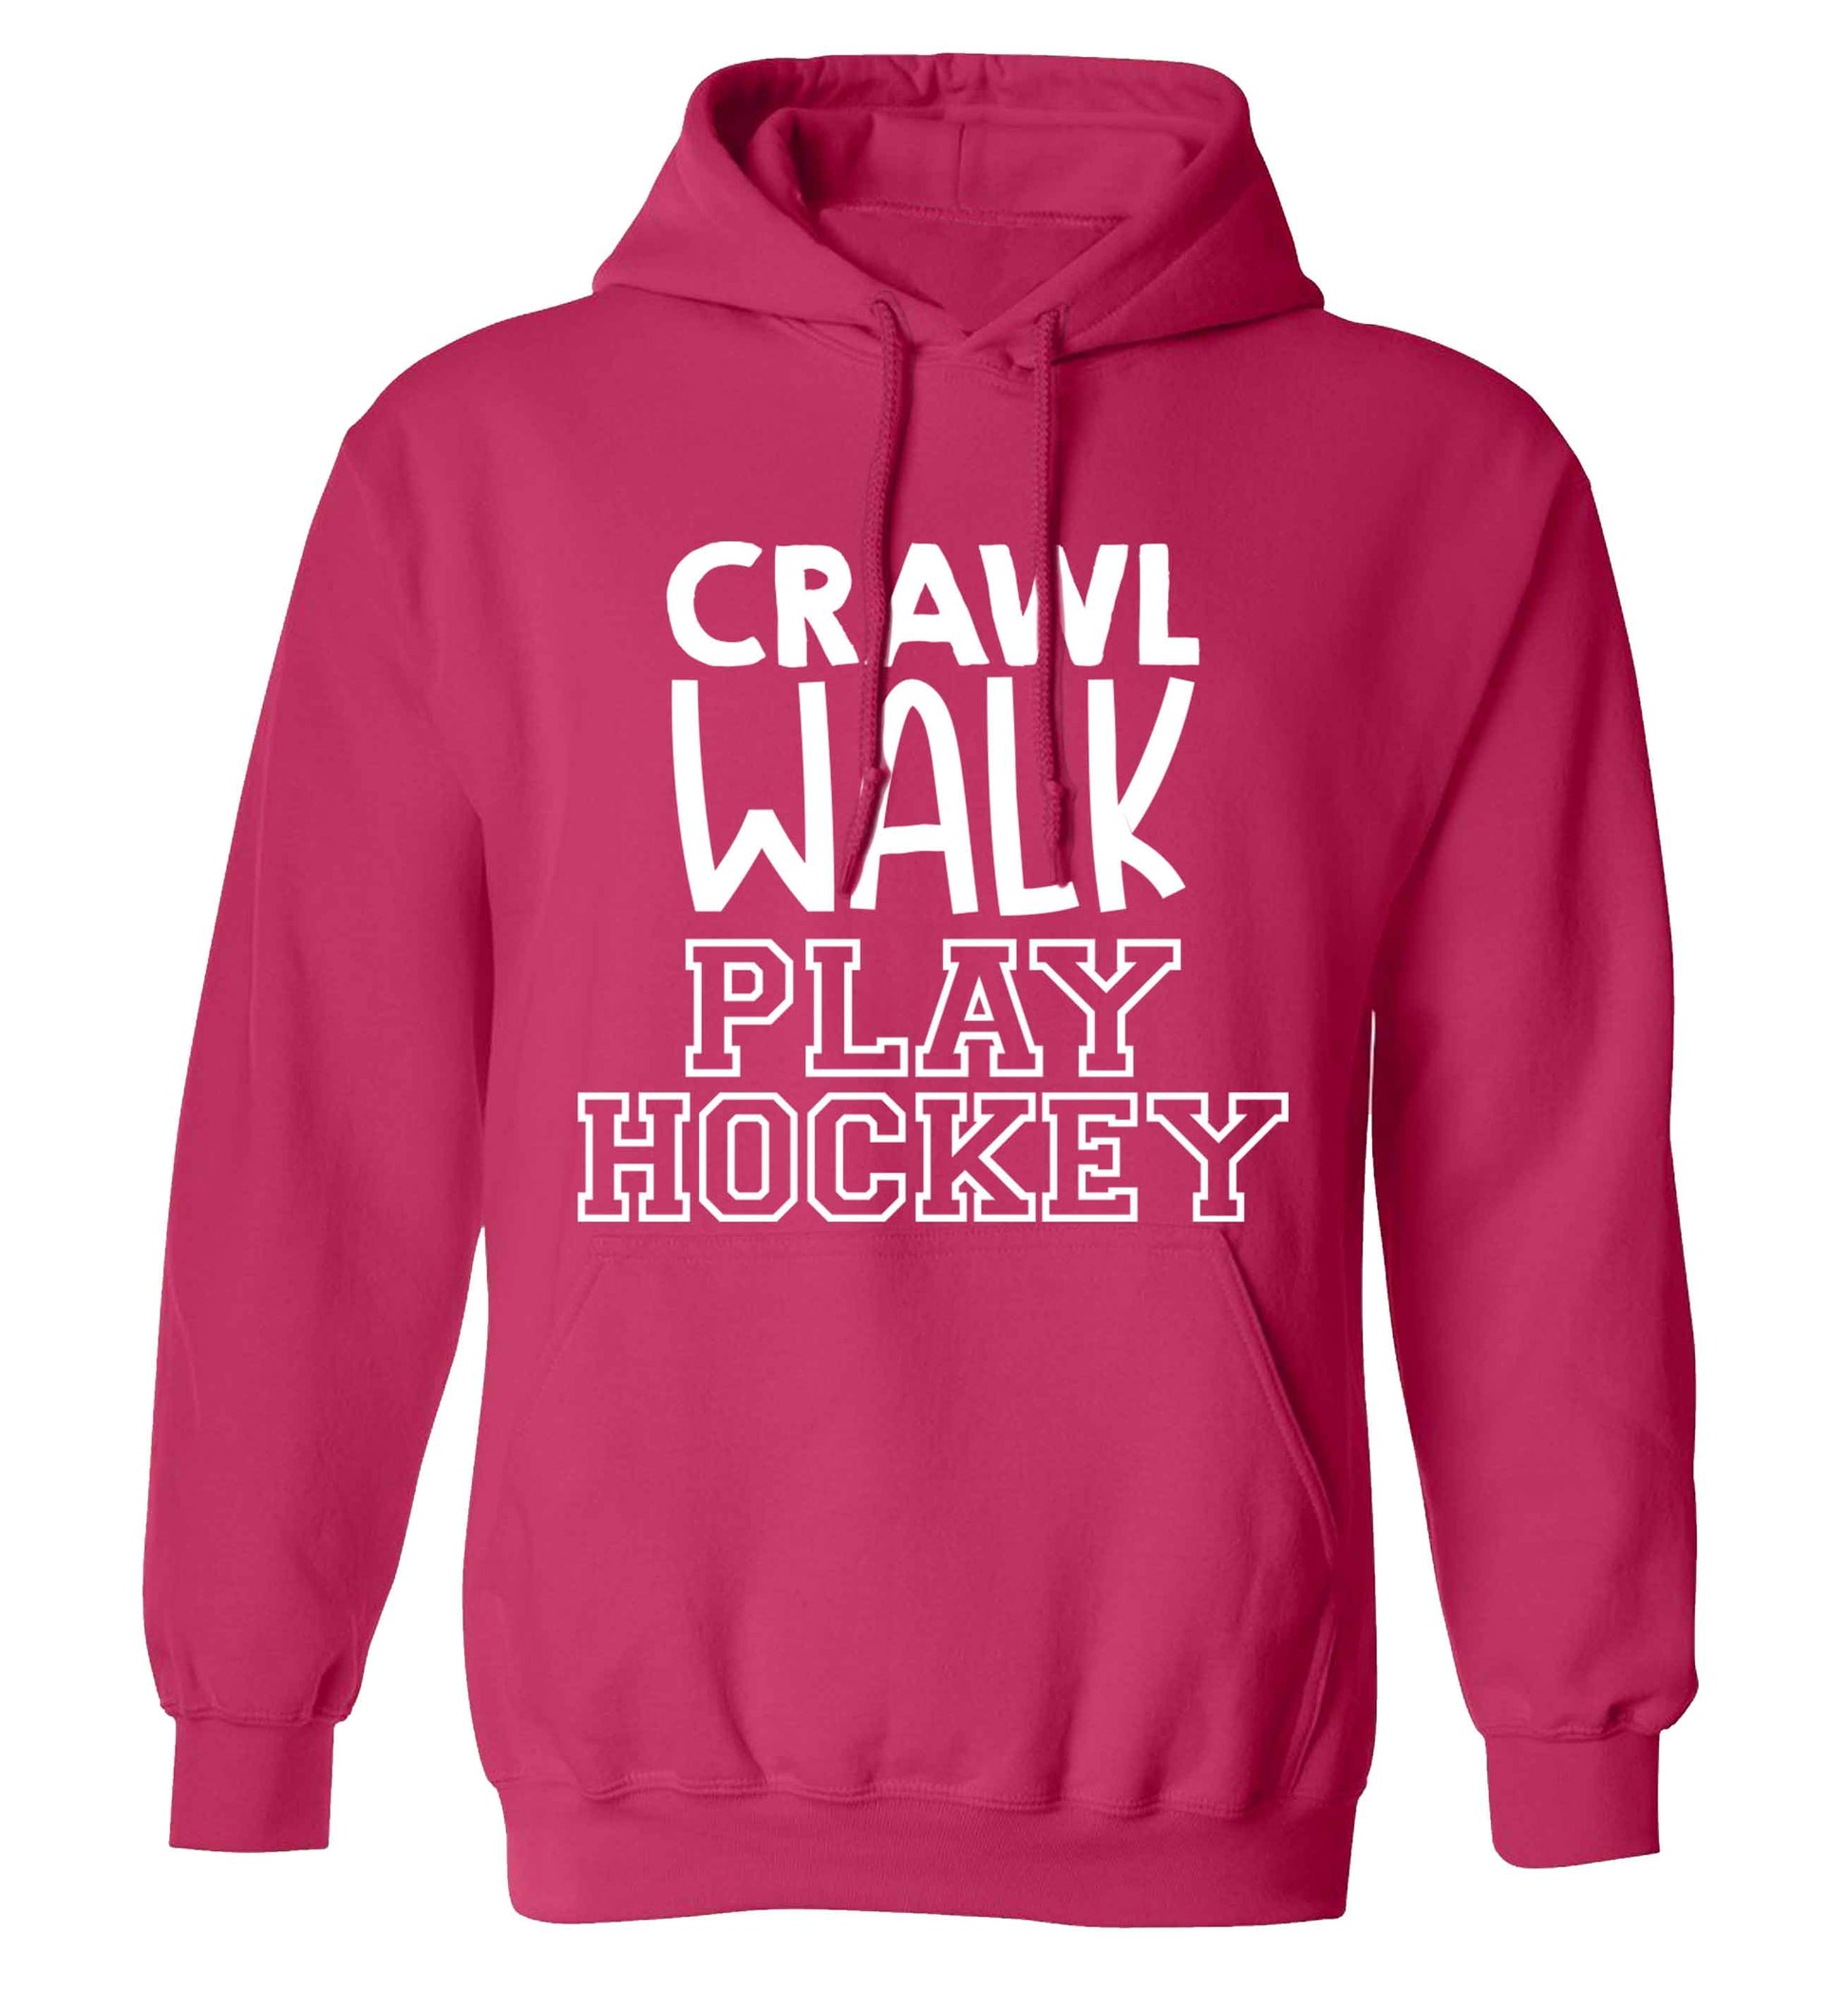 Crawl walk play hockey adults unisex pink hoodie 2XL